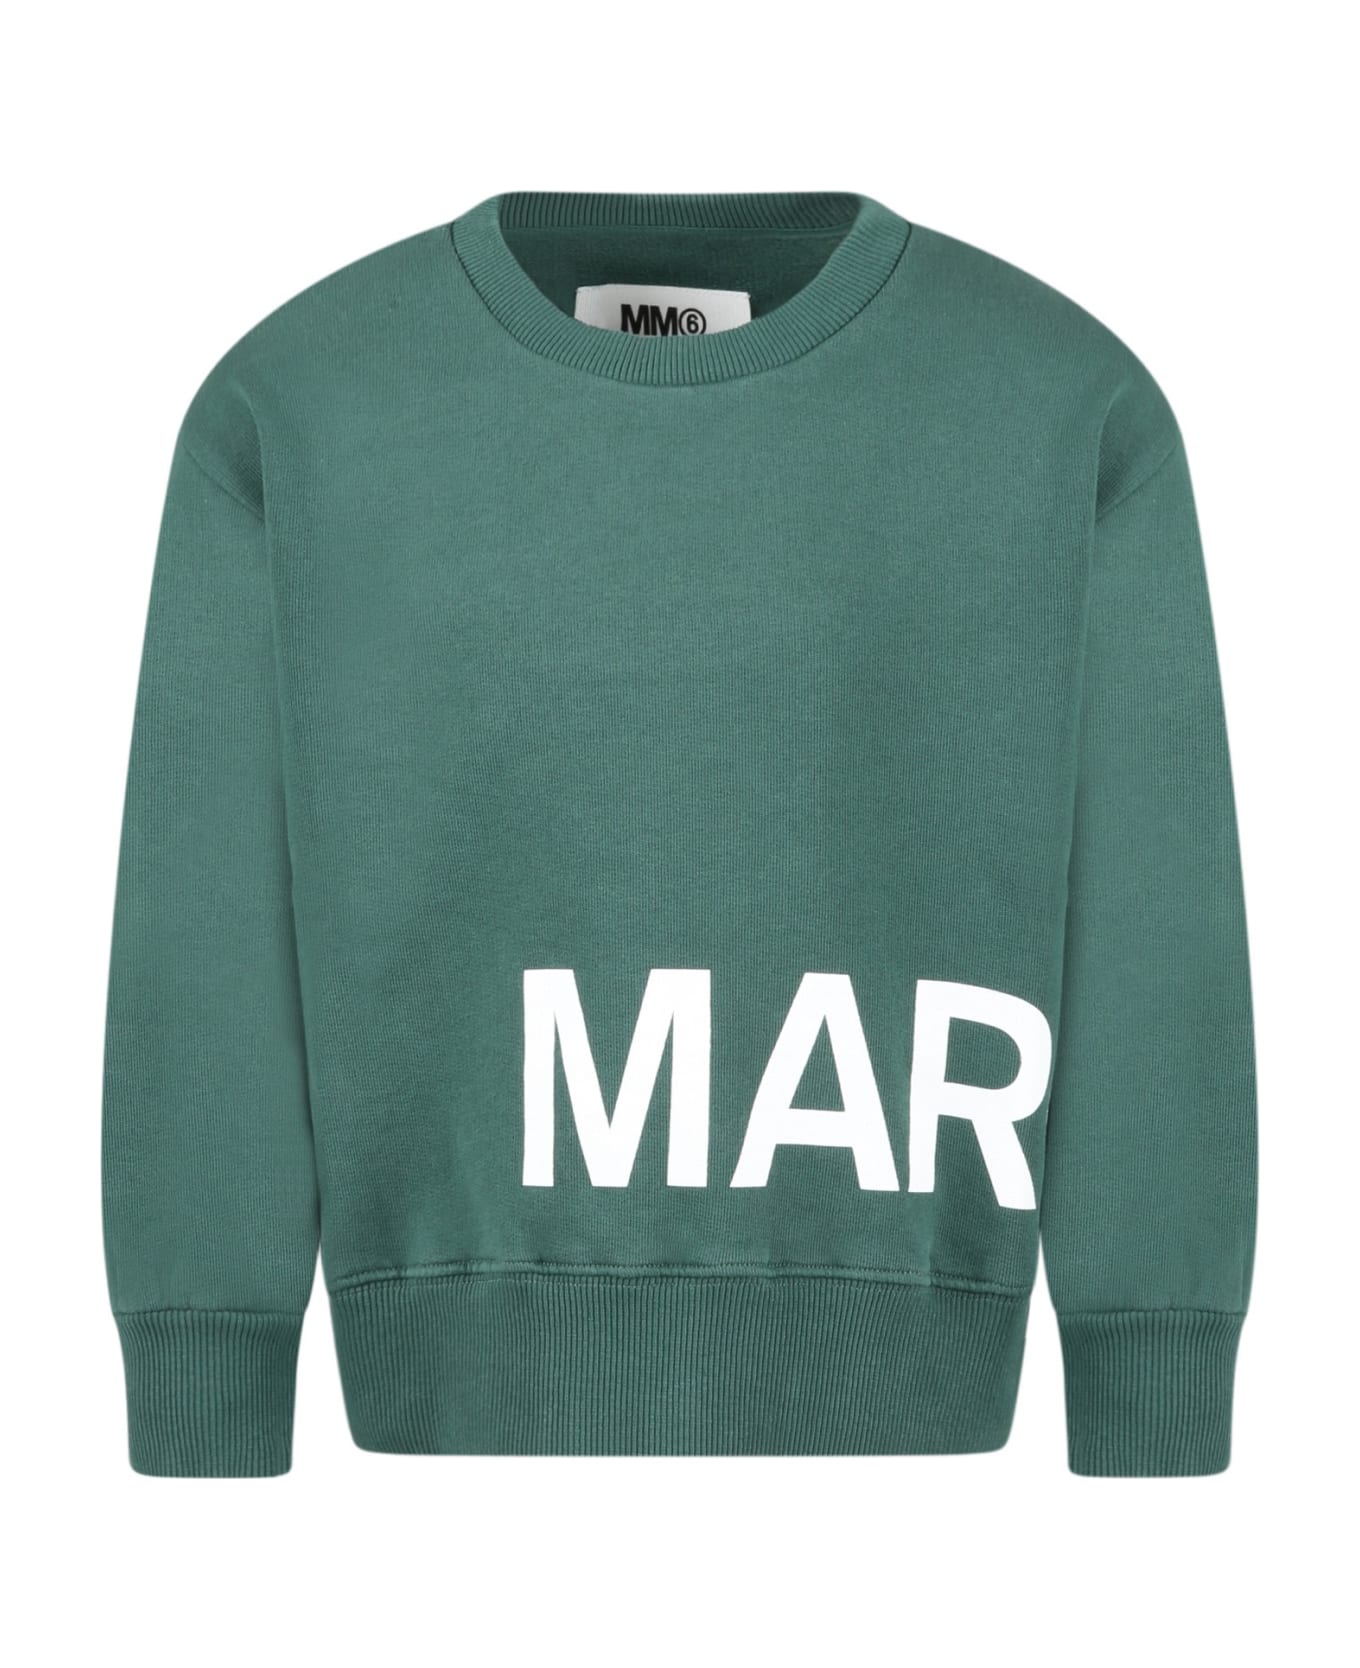 MM6 Maison Margiela Green Sweatshirt For Kids With White Logo - Green